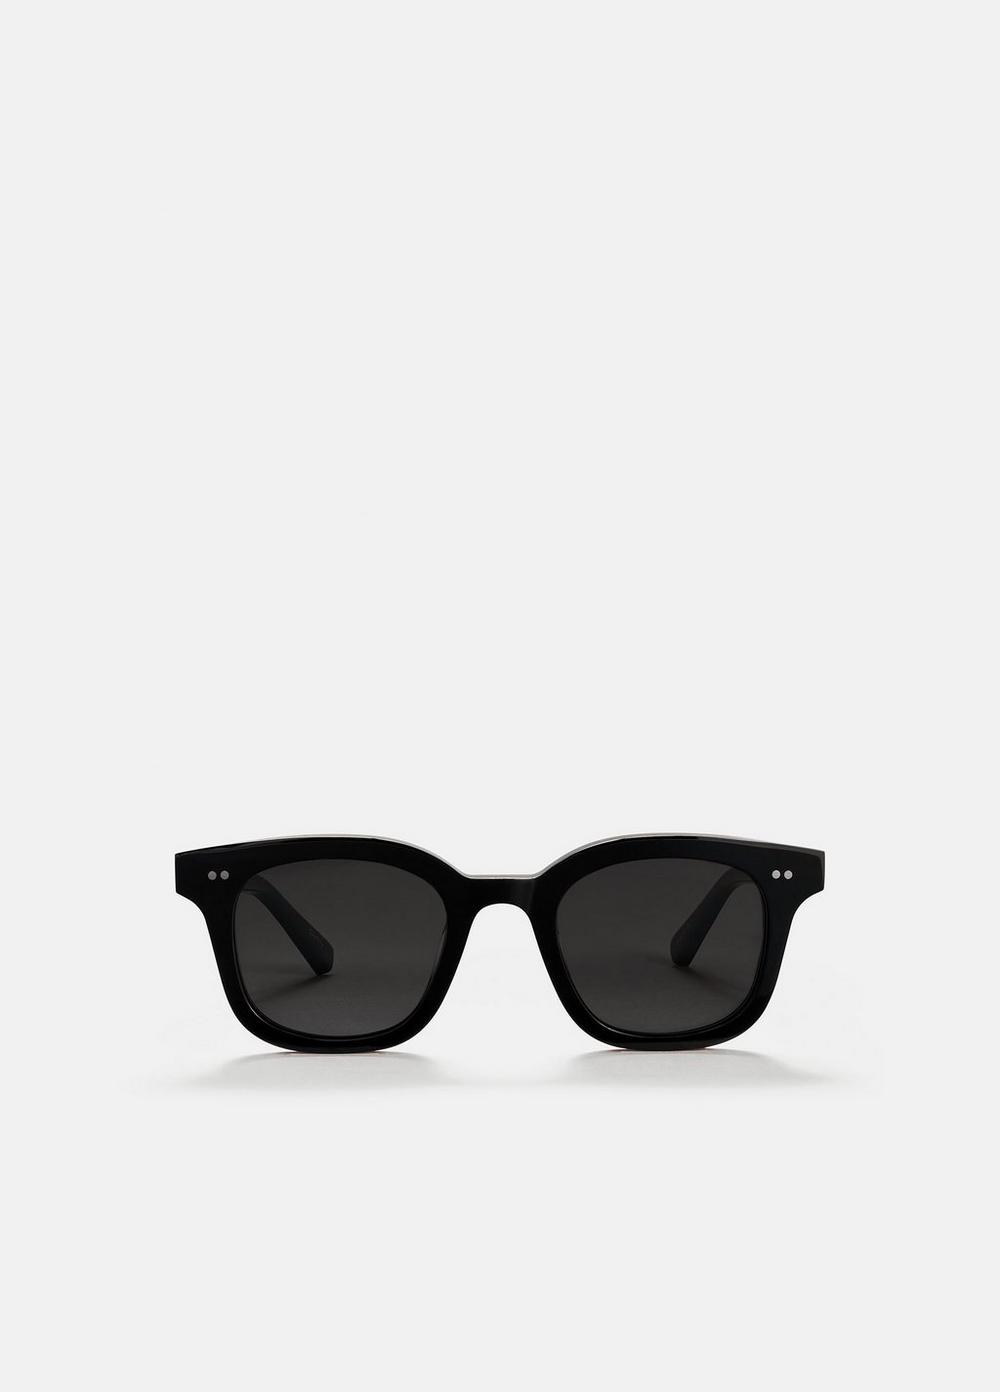 Chimi 02 Sunglasses, Black Vince